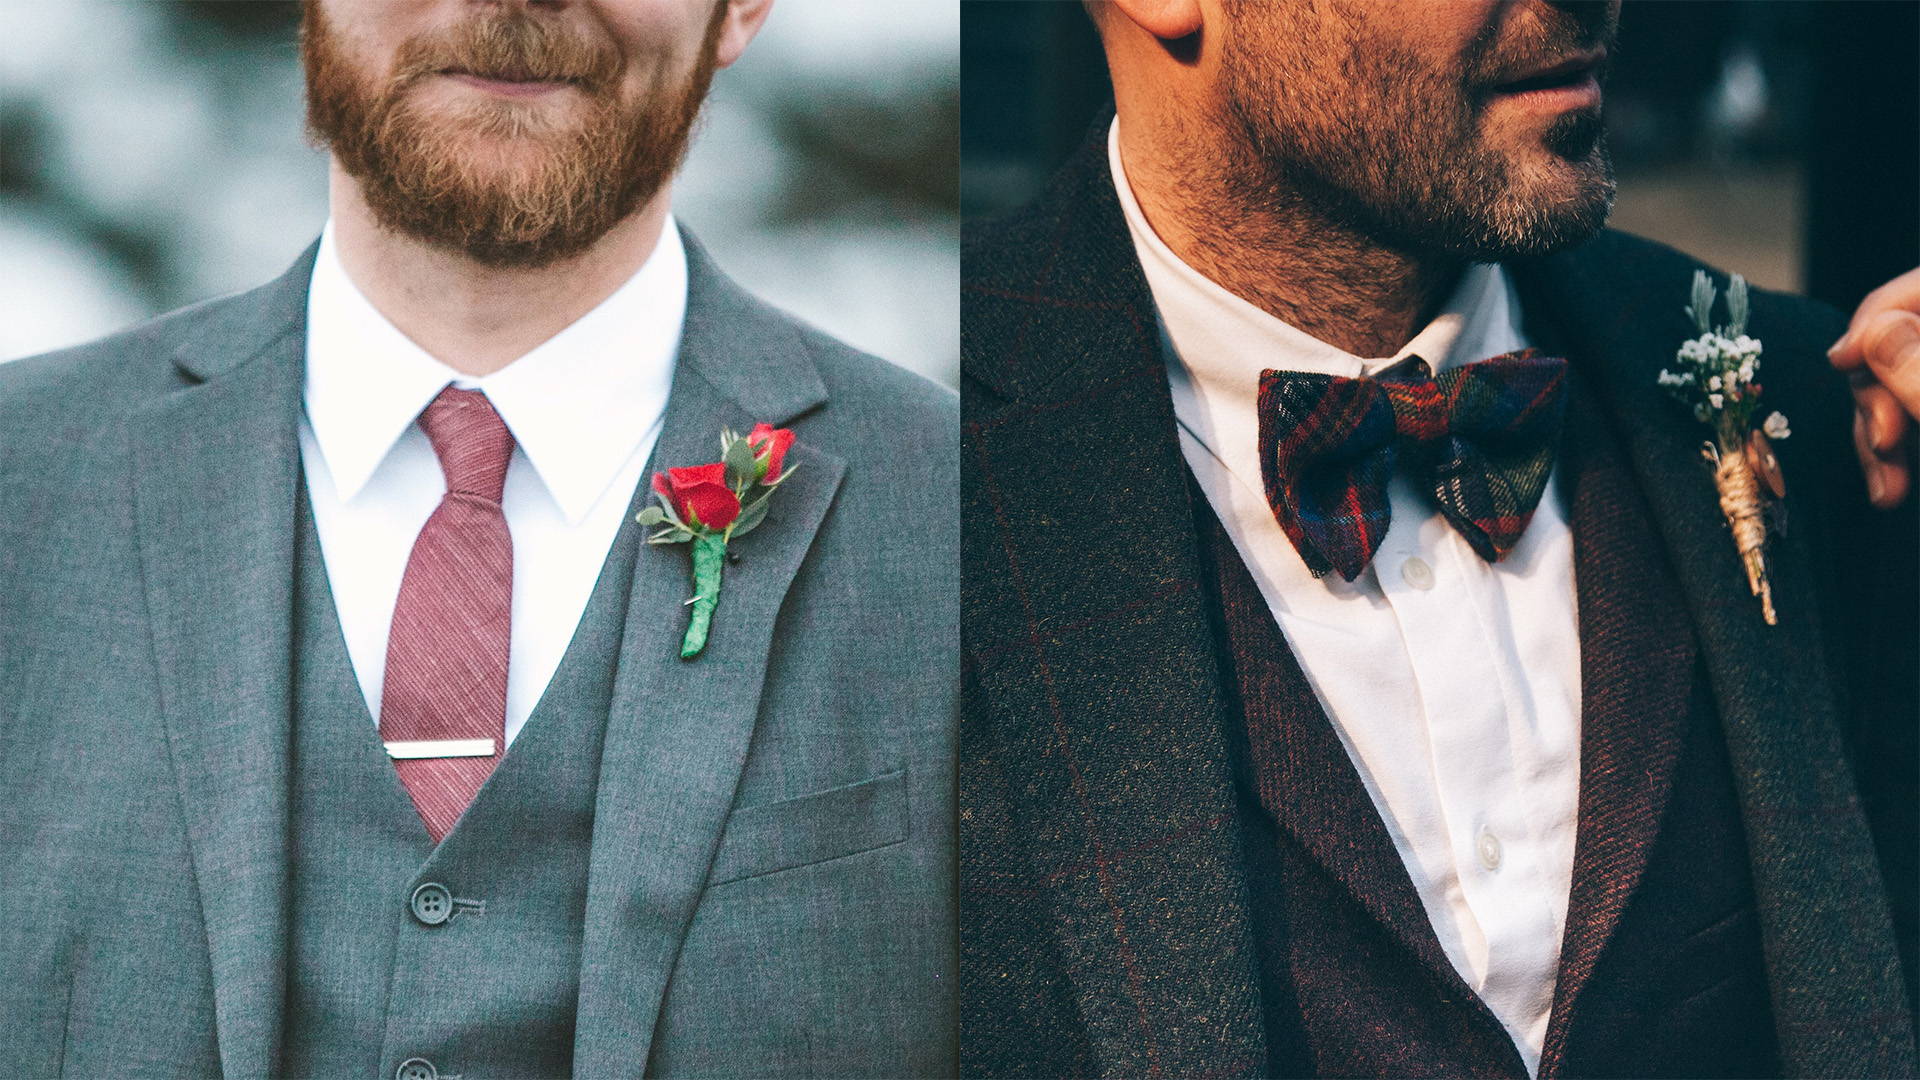 Tie vs Bow Tie: Which Should a Groom Wear